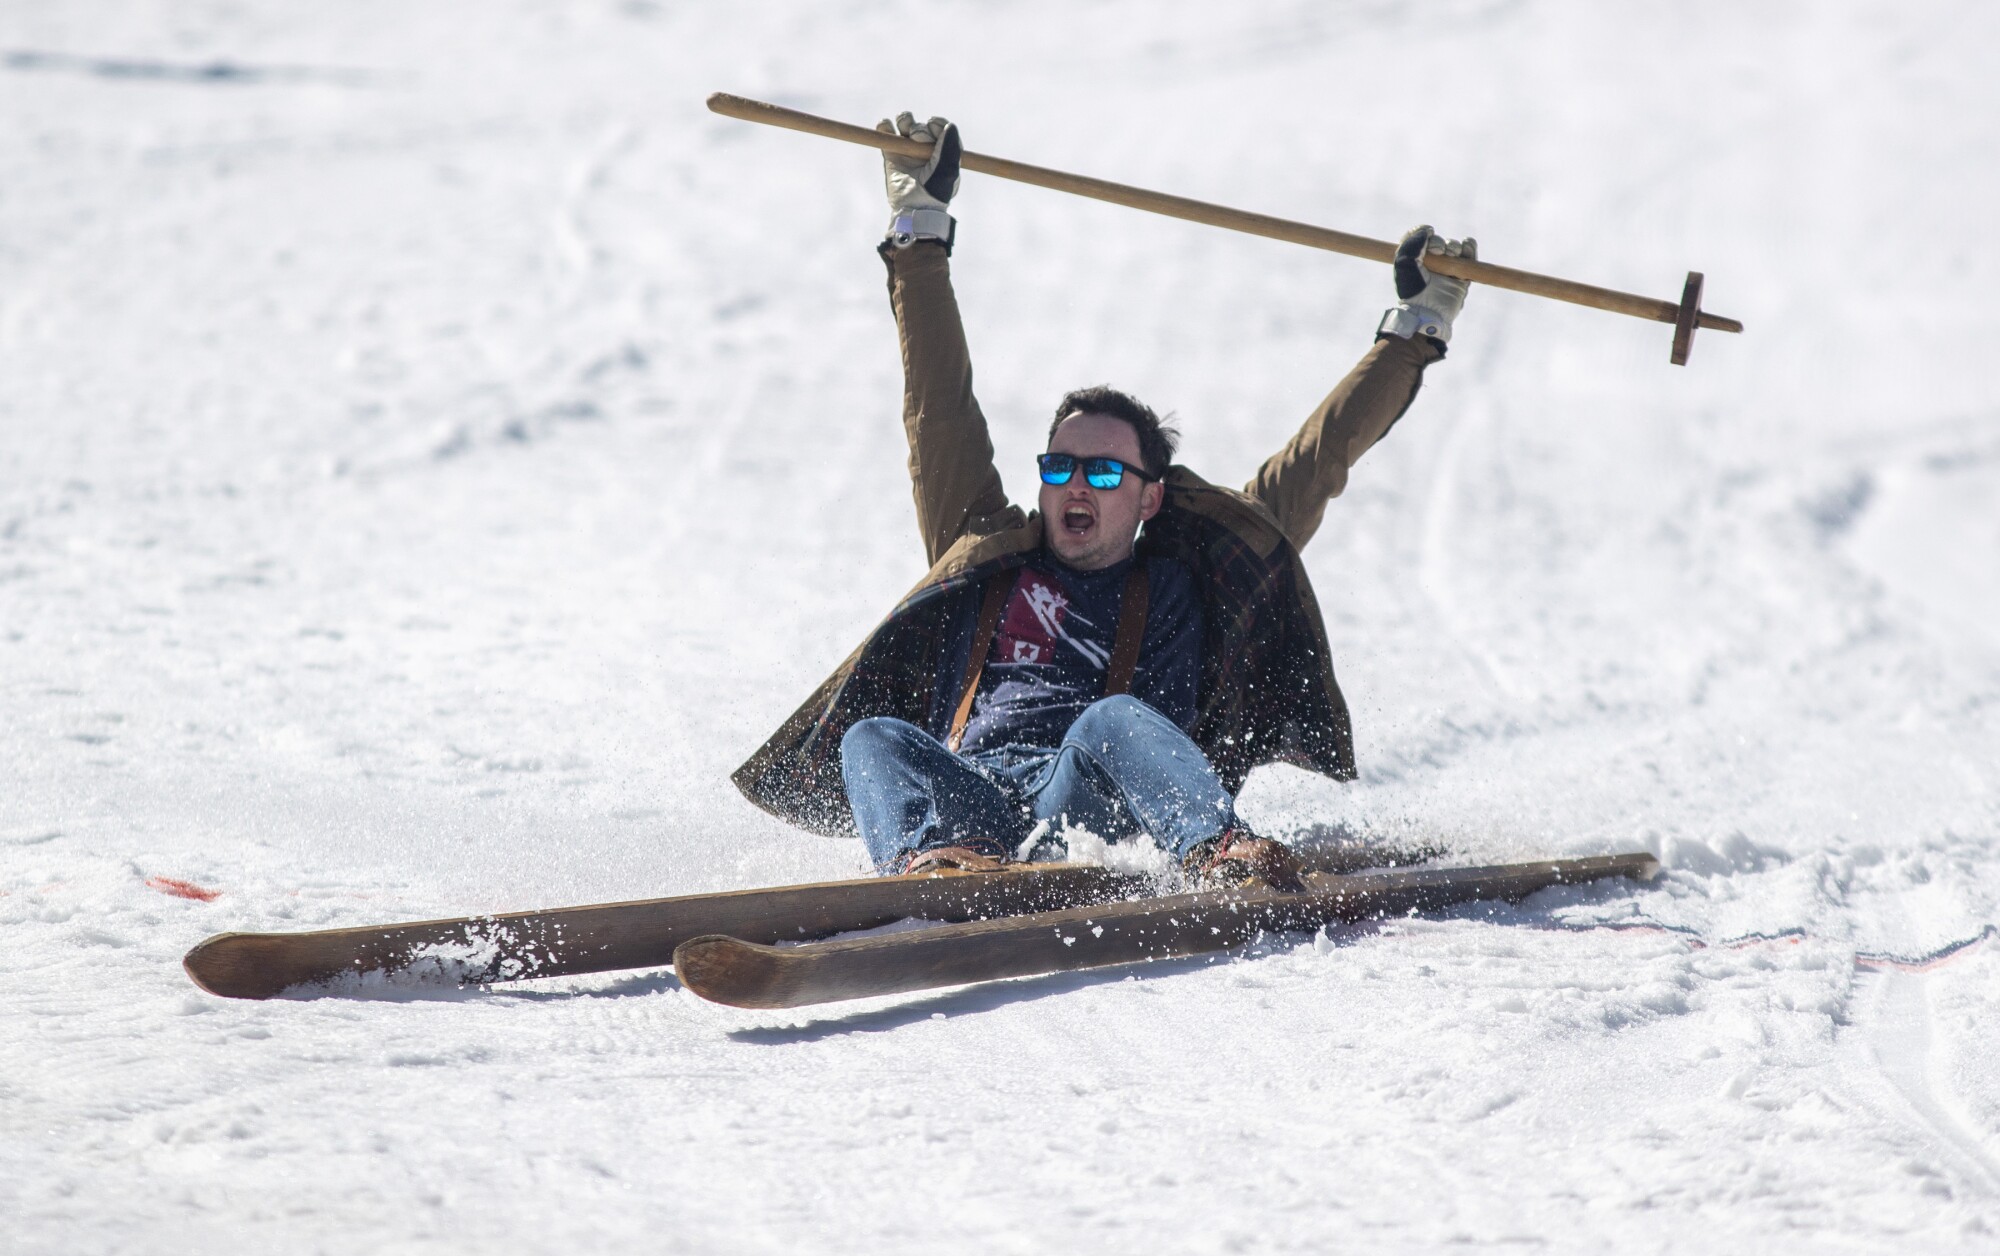 A ski racer raises his arms in triumph